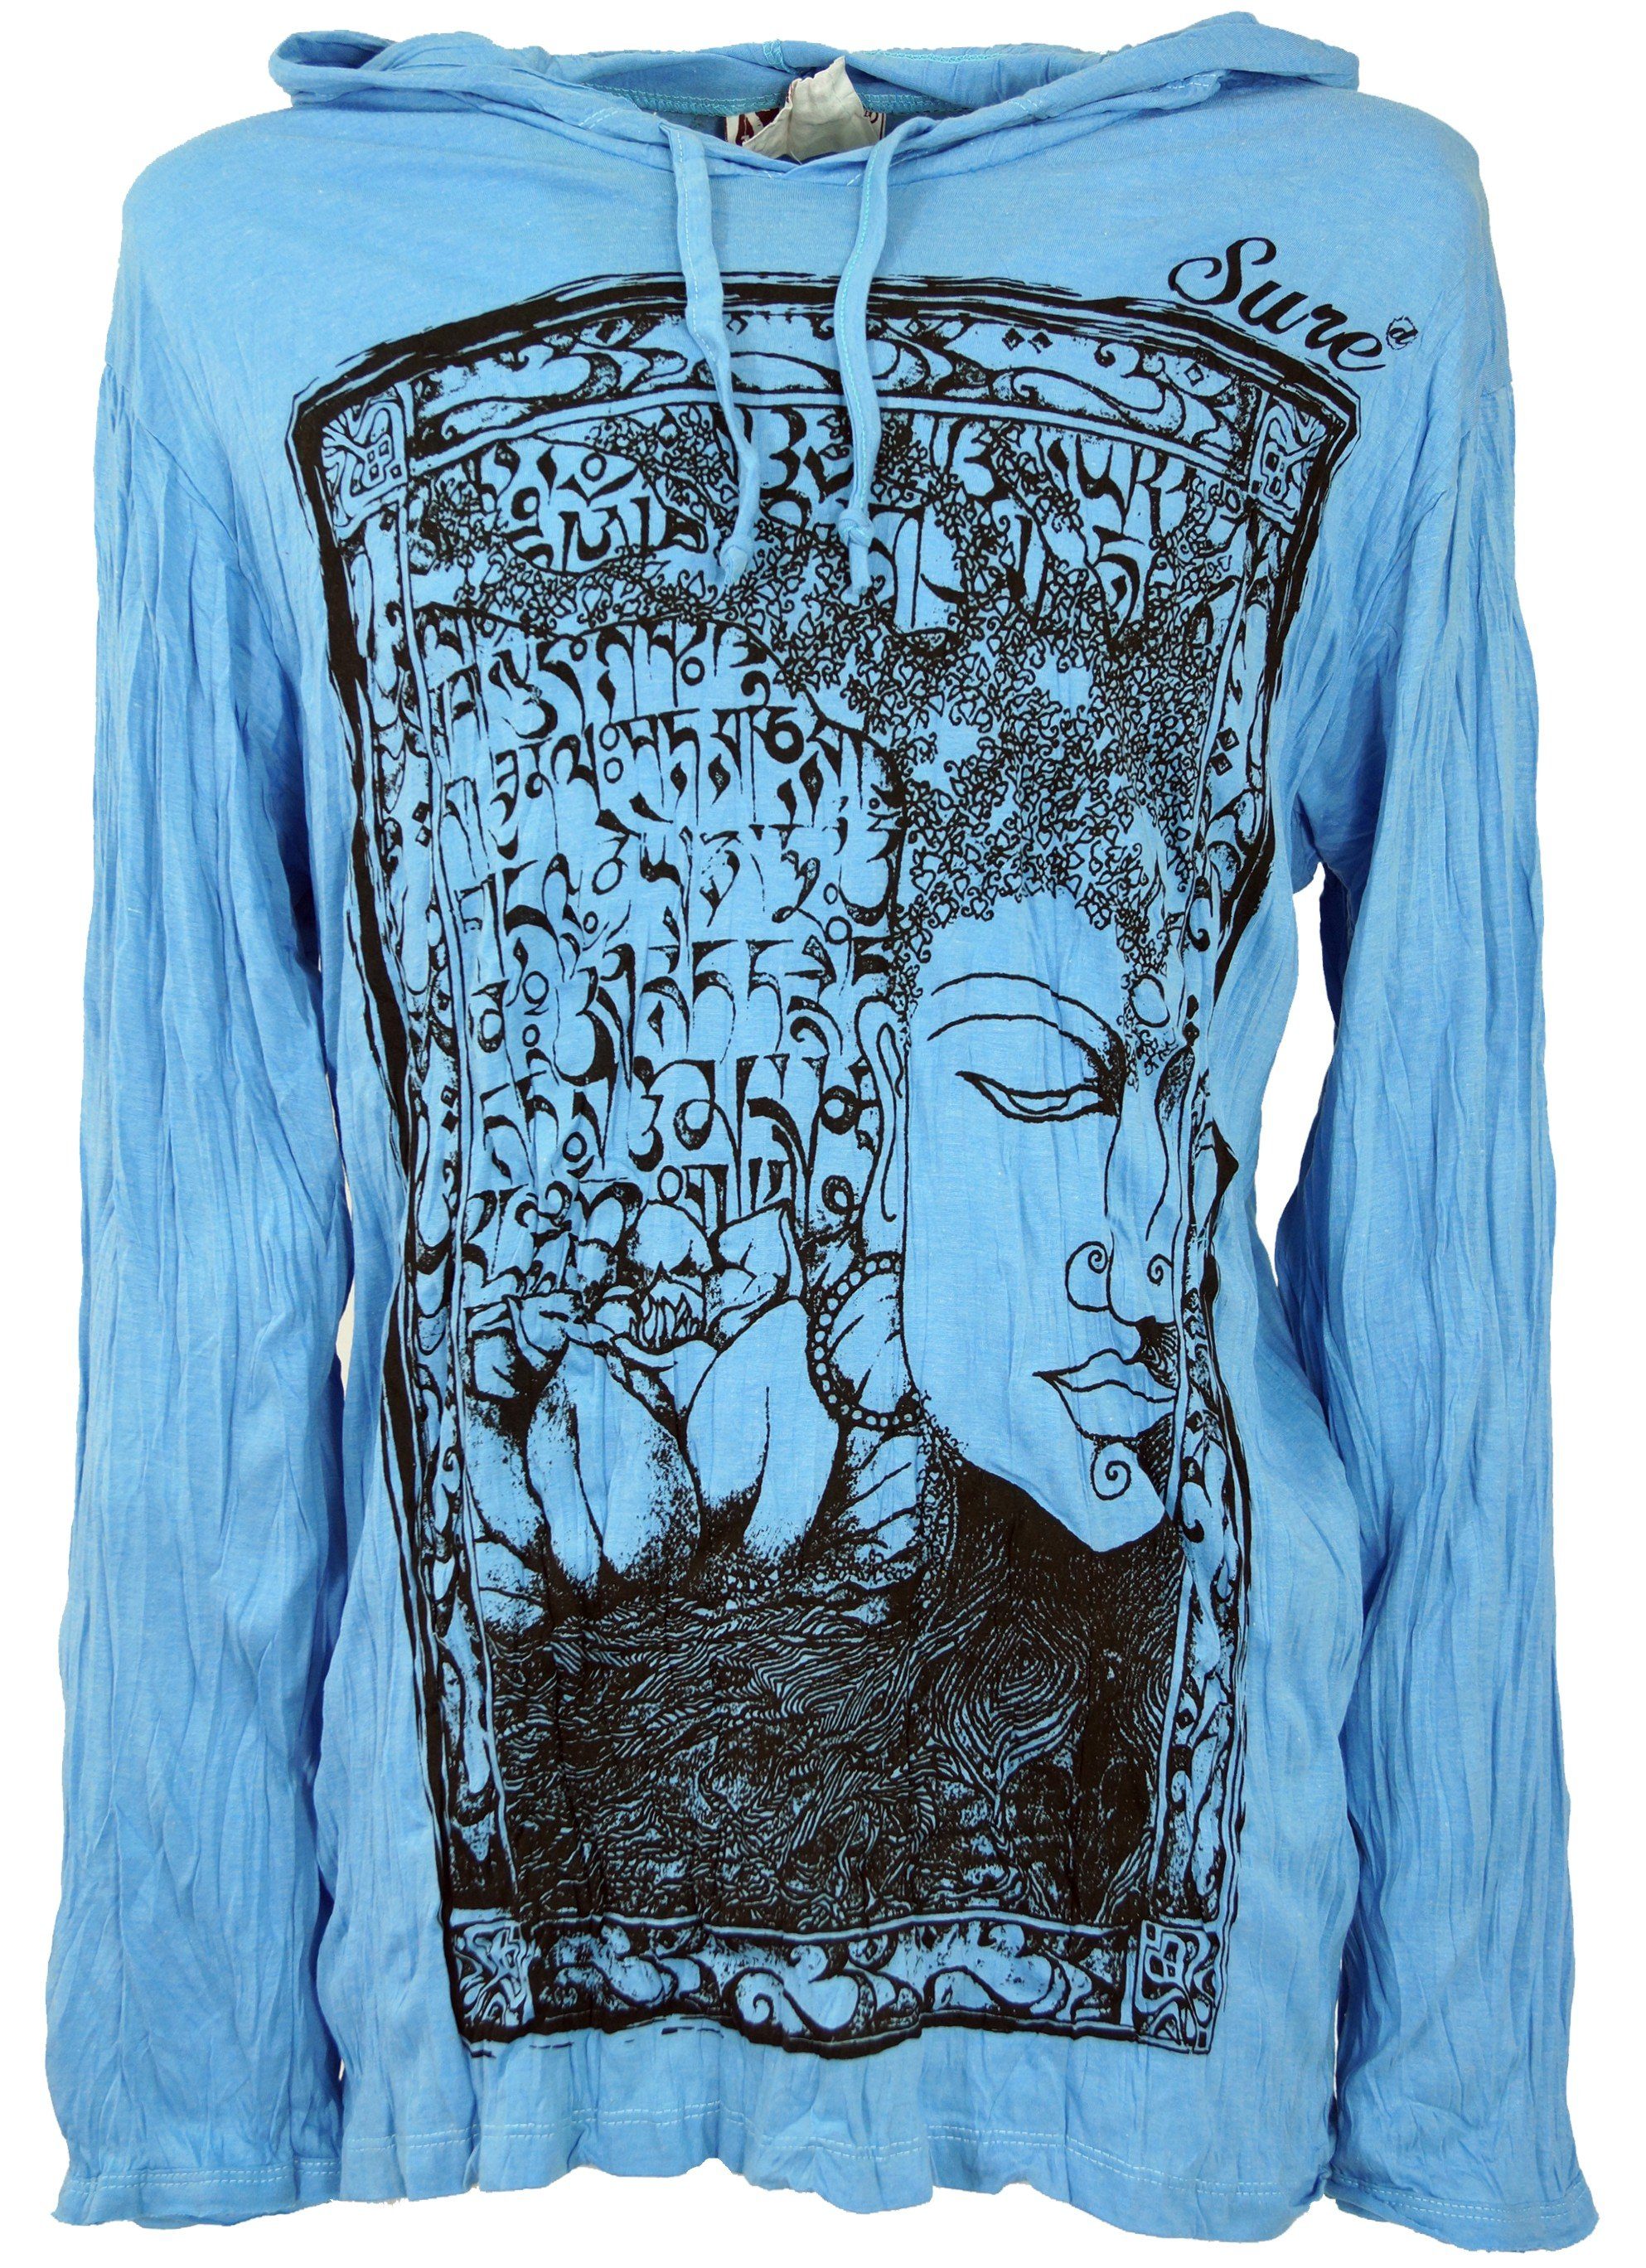 hellblau Sure -.. Mantra Goa alternative Bekleidung Style, Kapuzenshirt T-Shirt Guru-Shop Buddha Langarmshirt, Festival,